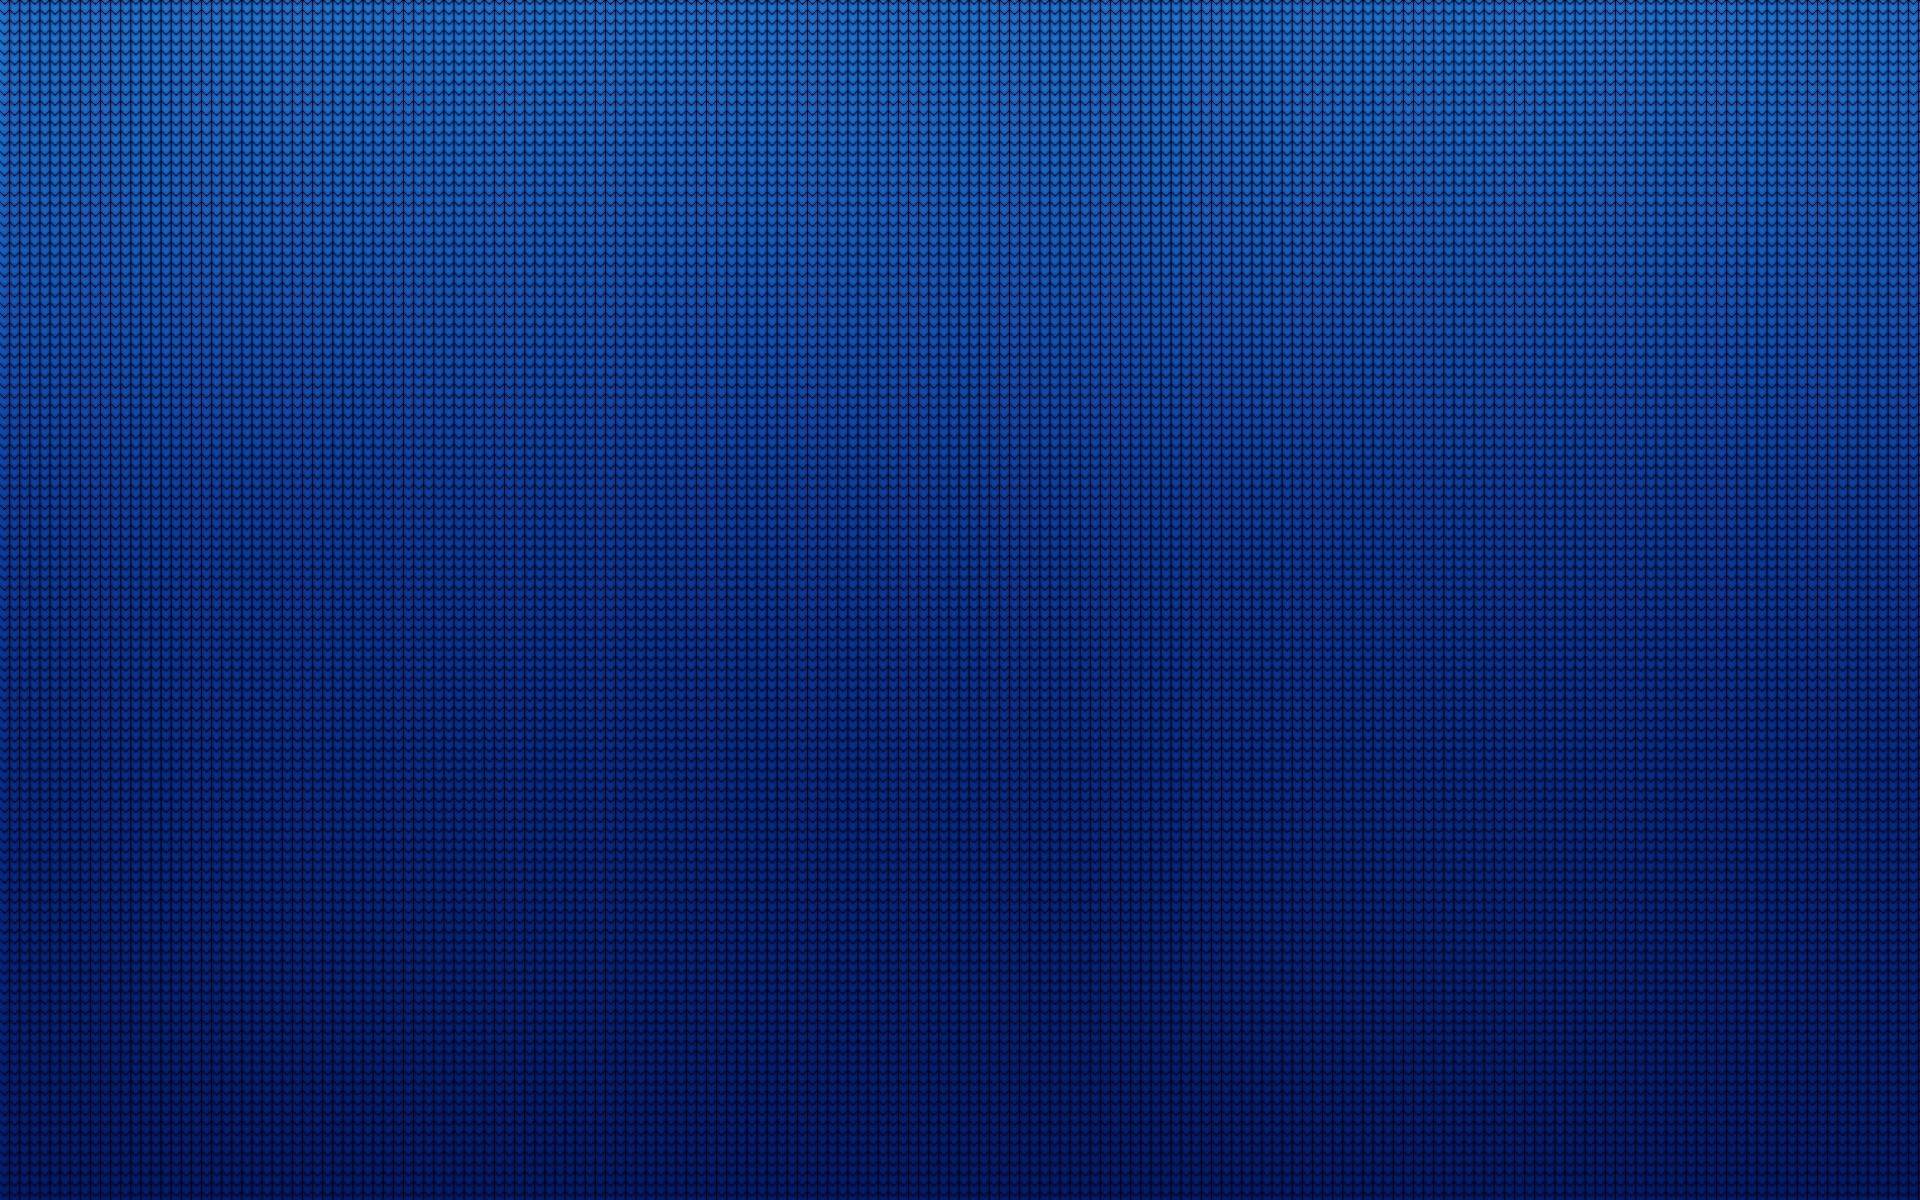 Dark Blue Background Image Wallpaper. photofullhd